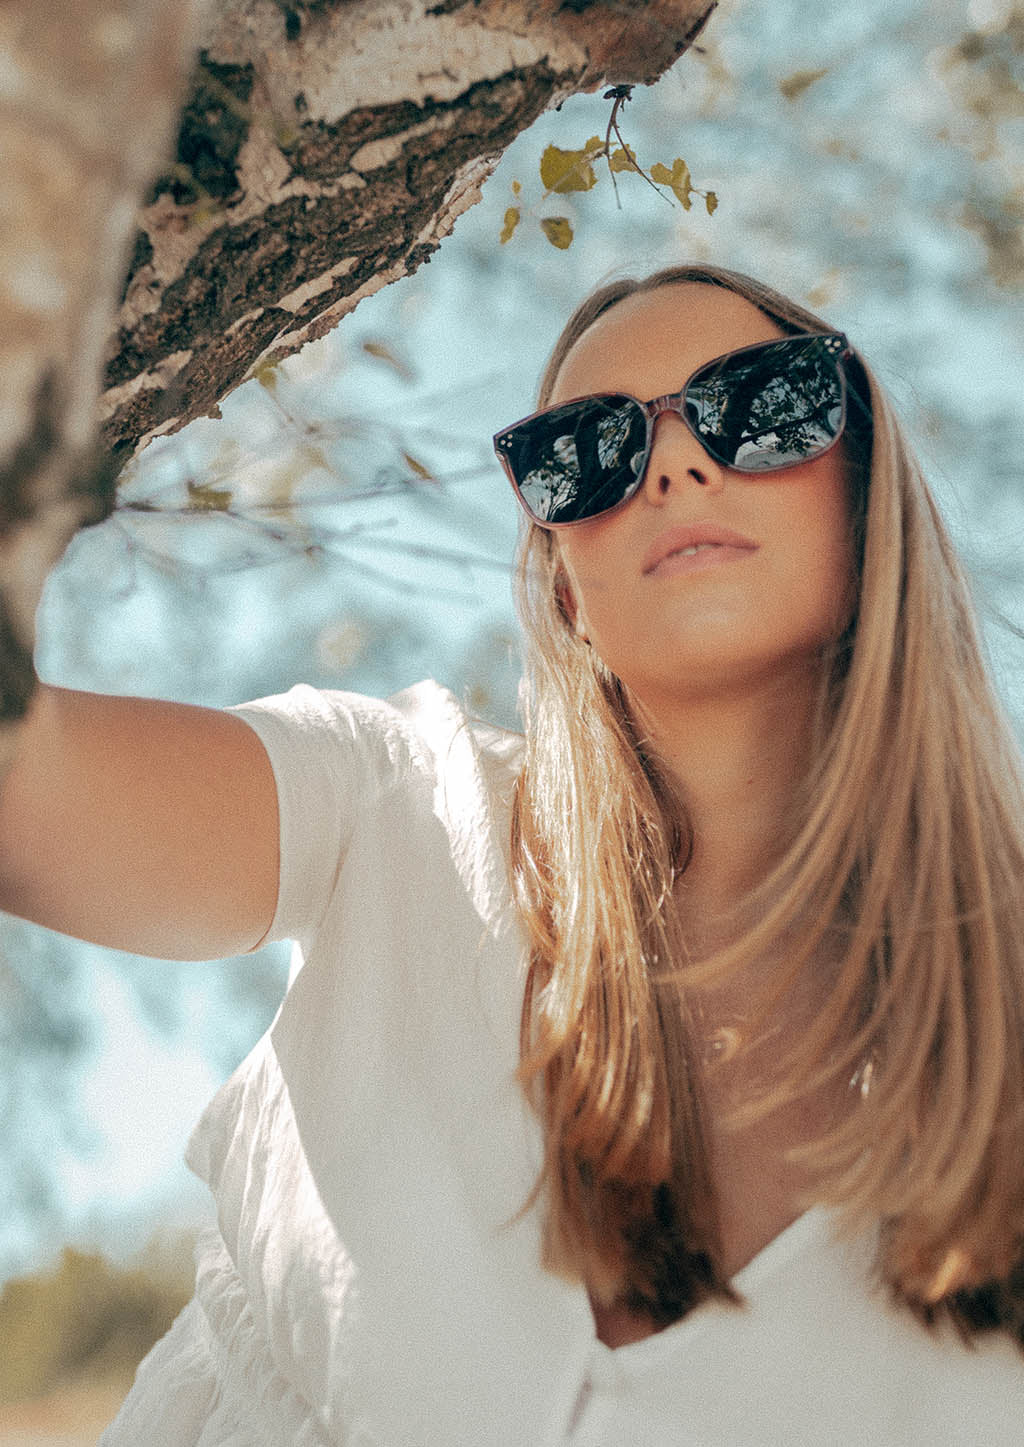 Dahlia Wayfarer sunglasses - On female Swedish model